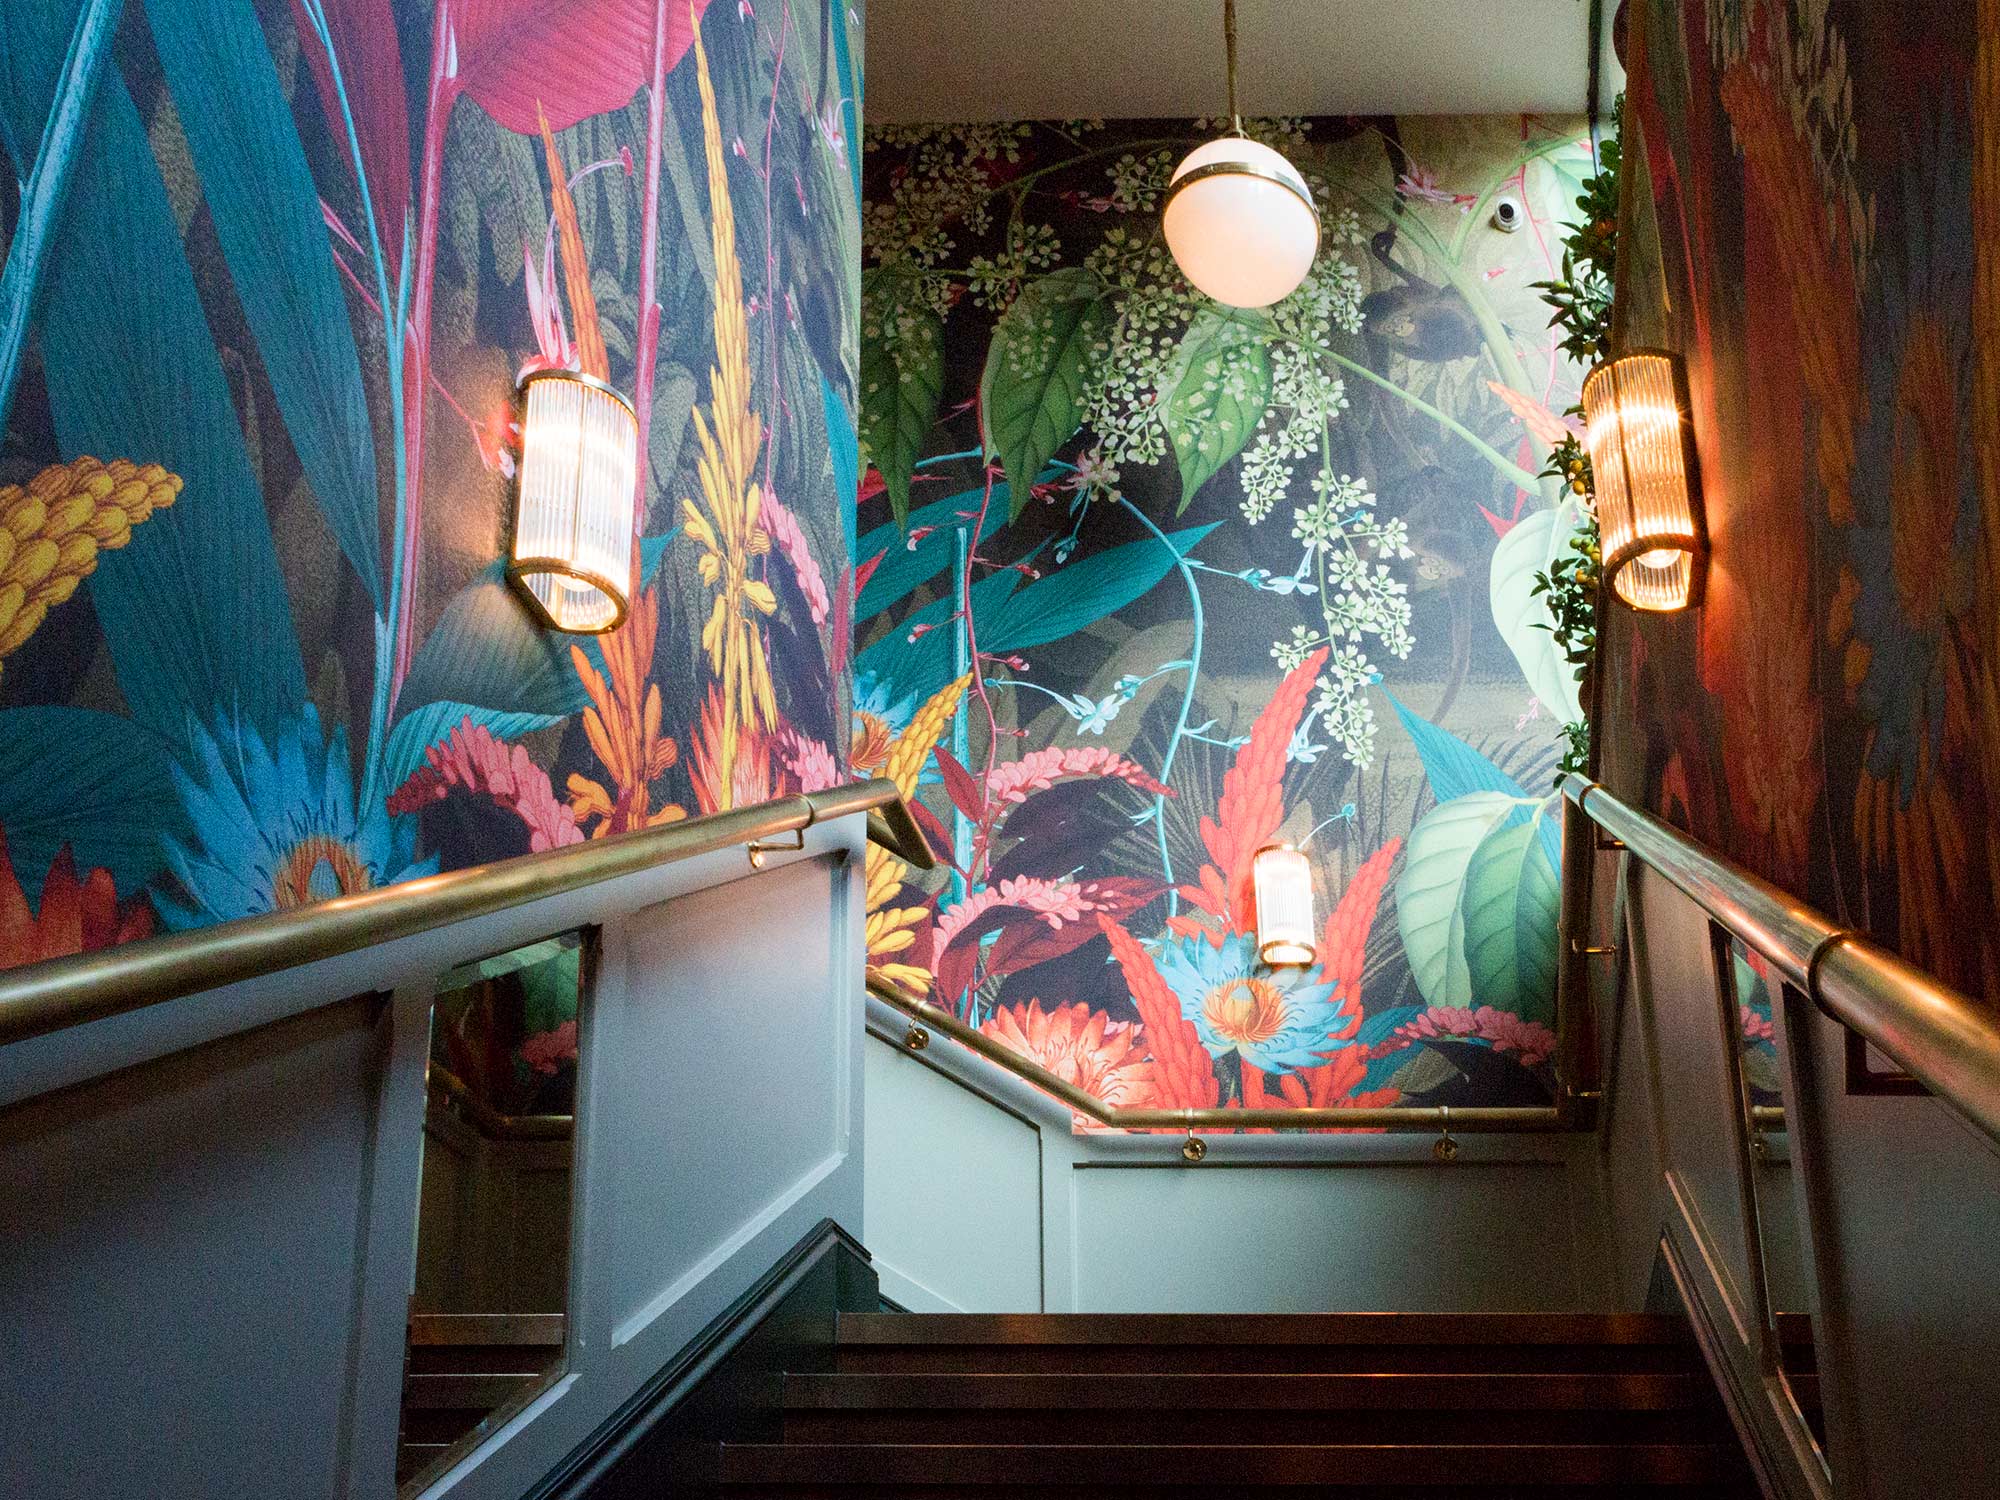 Hot tropics design above dado height wrapping a restaurant staircase